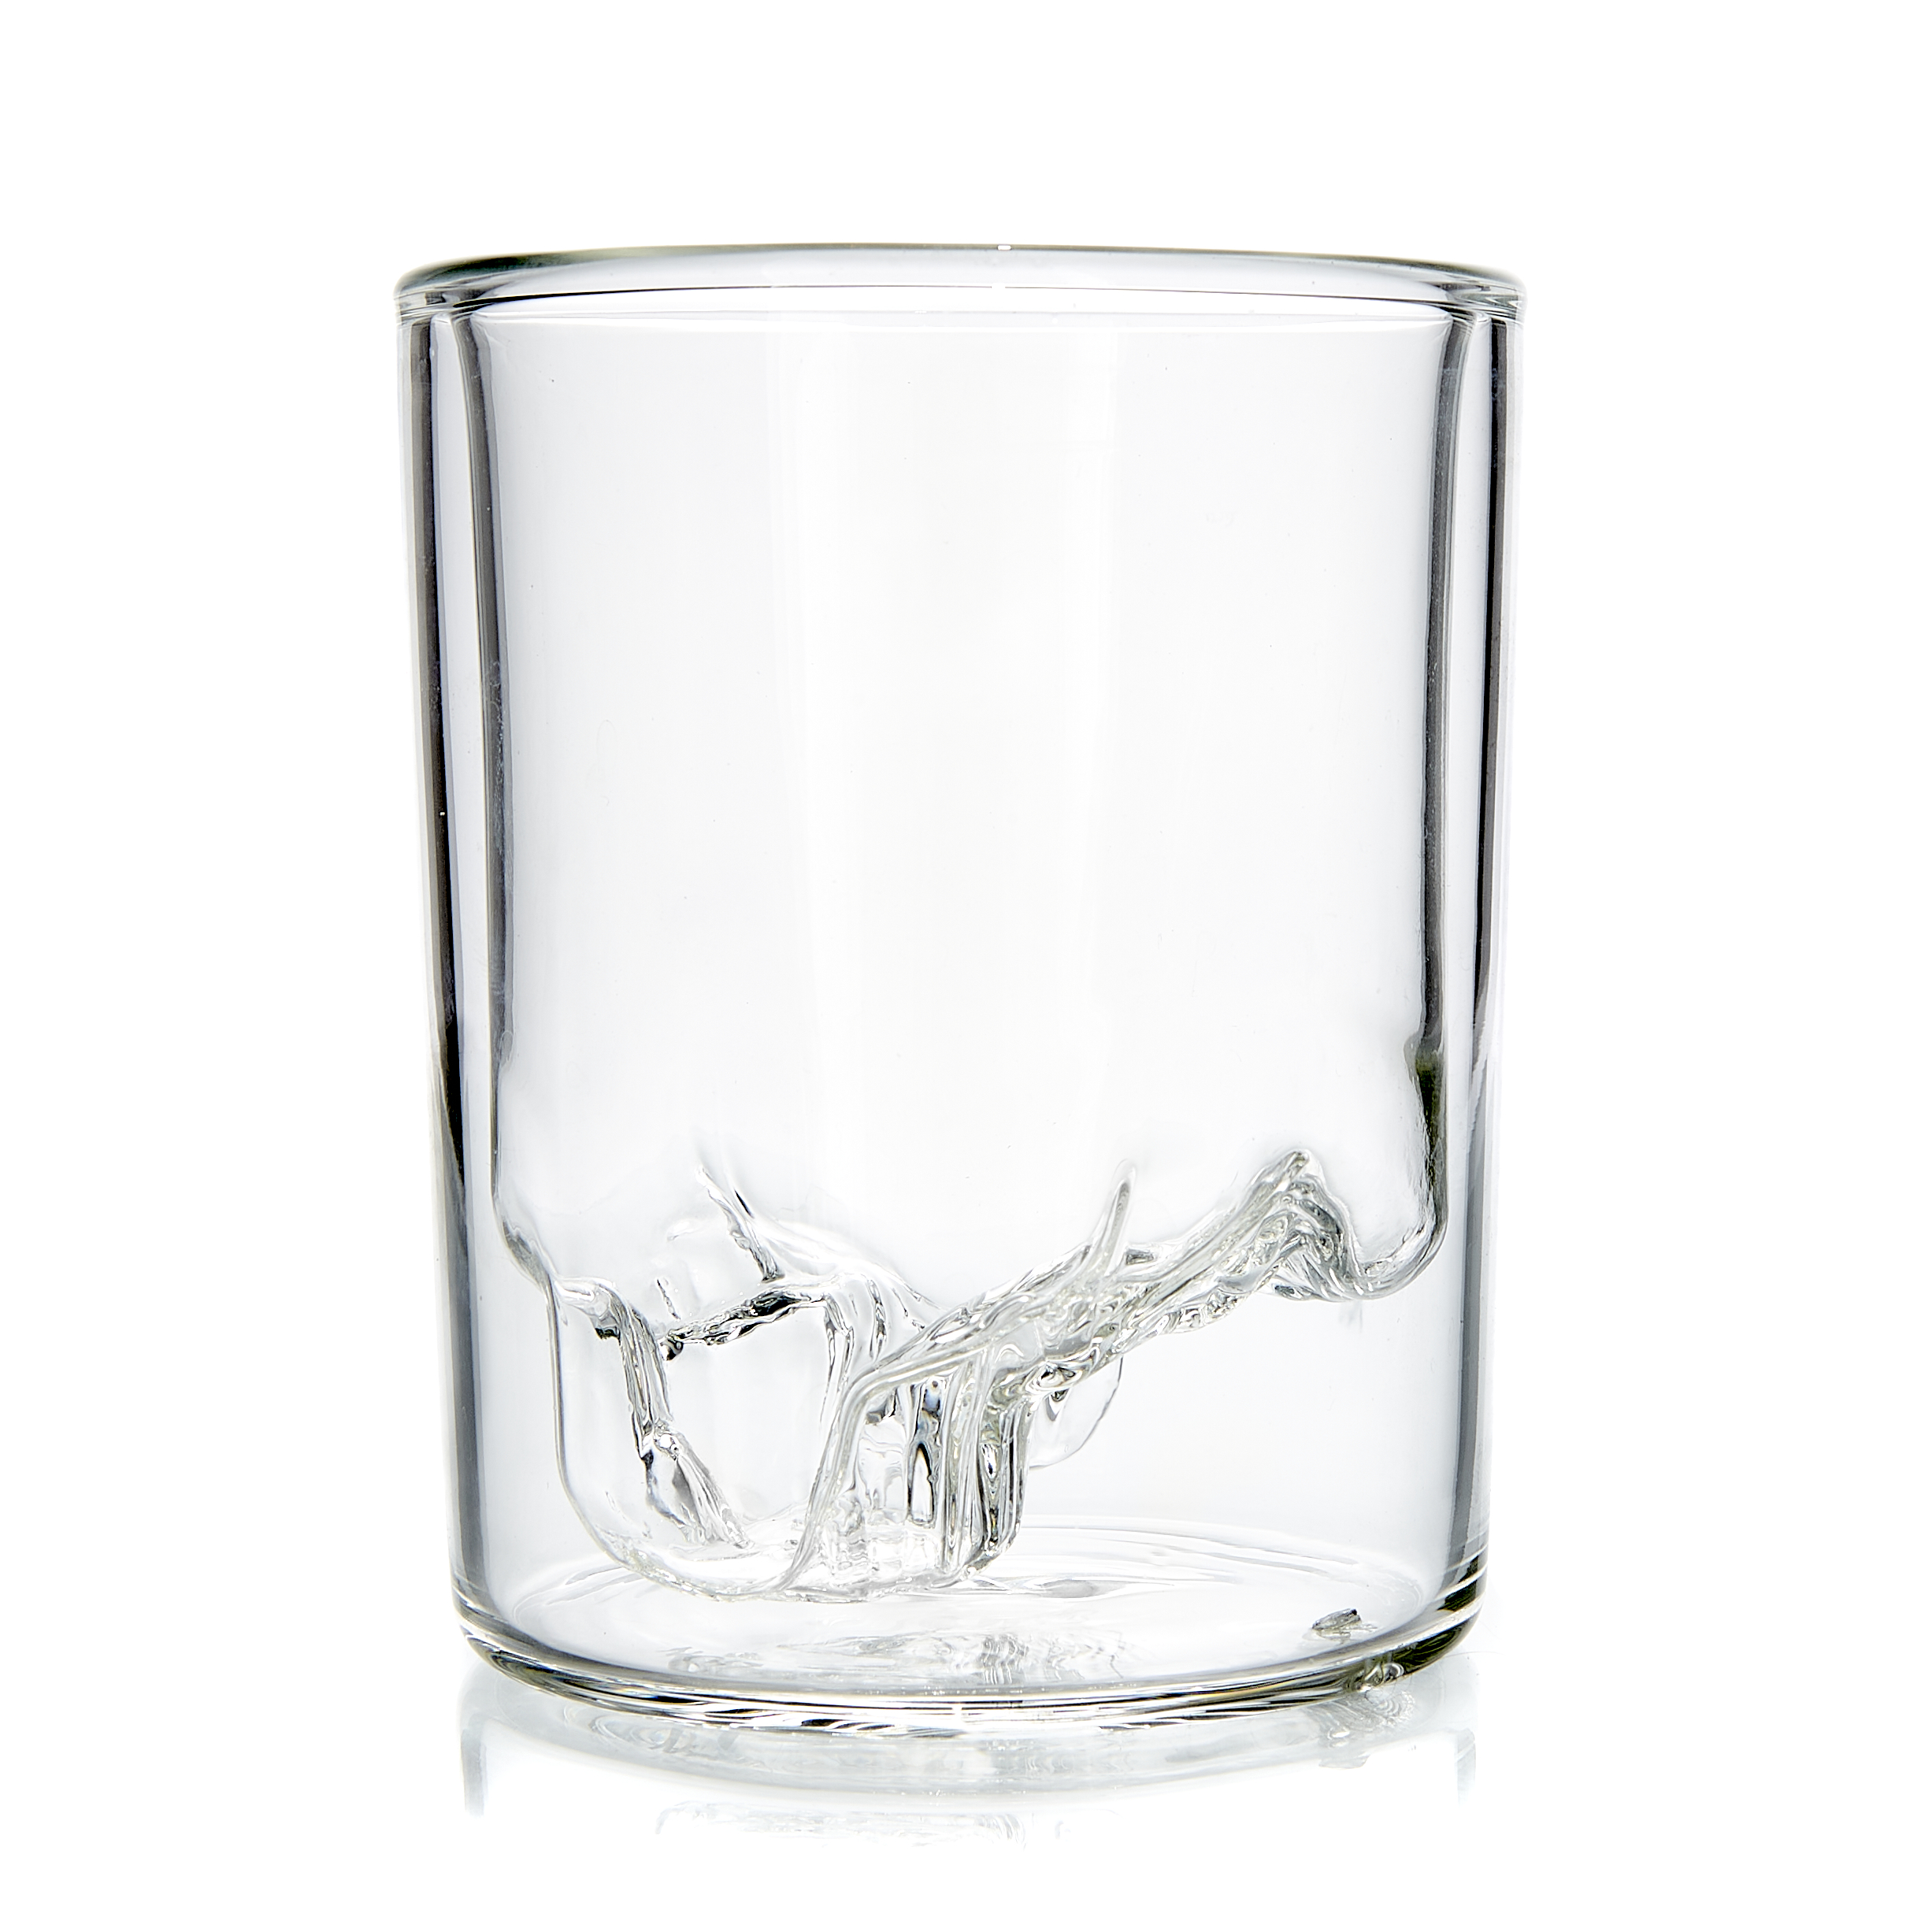 Huckberry Whiskey Peaks Glasses Review: An Aspiring Sip